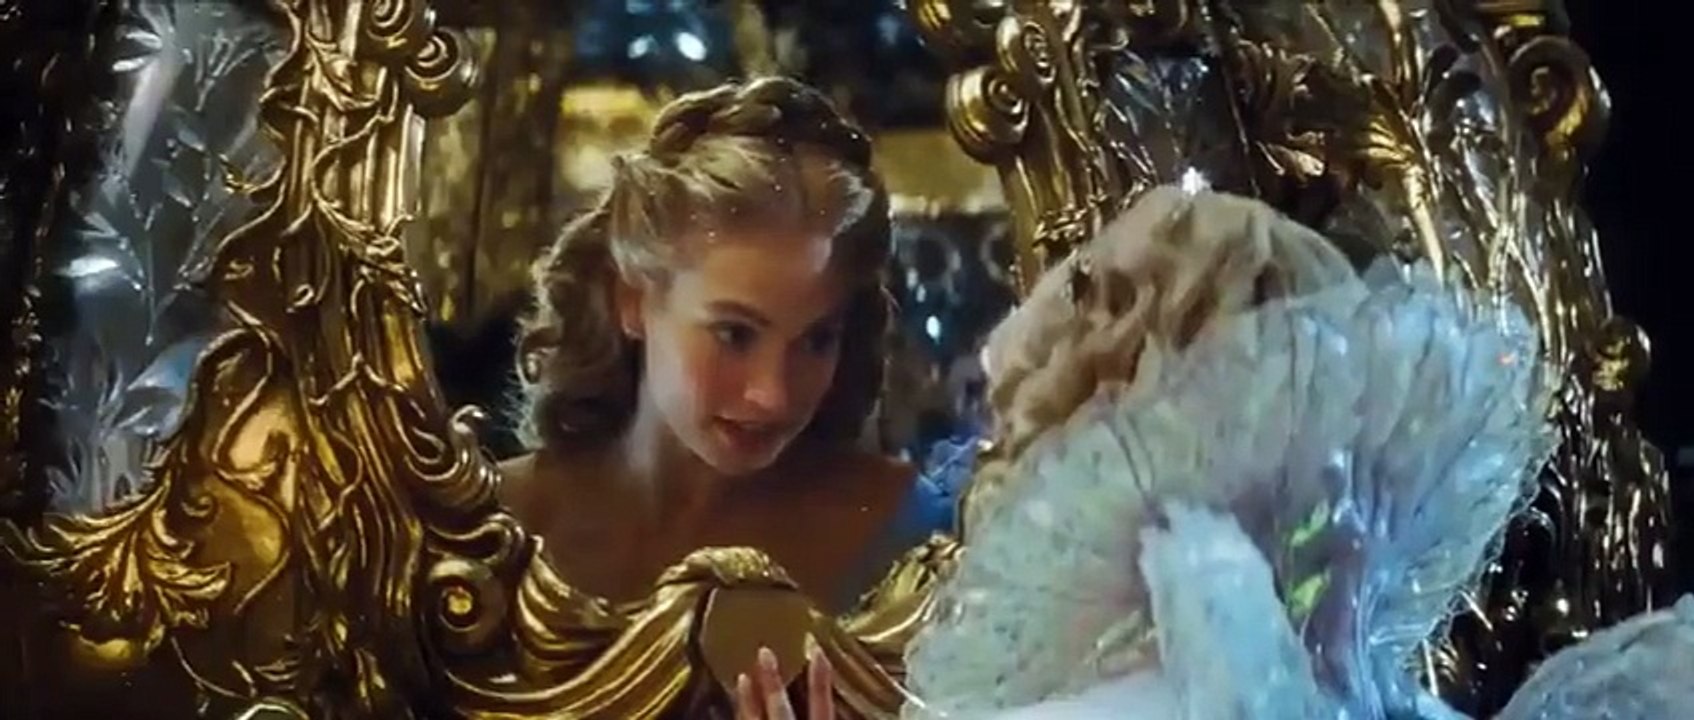 Cinderella Full Movie(2015) Dailymotion Video